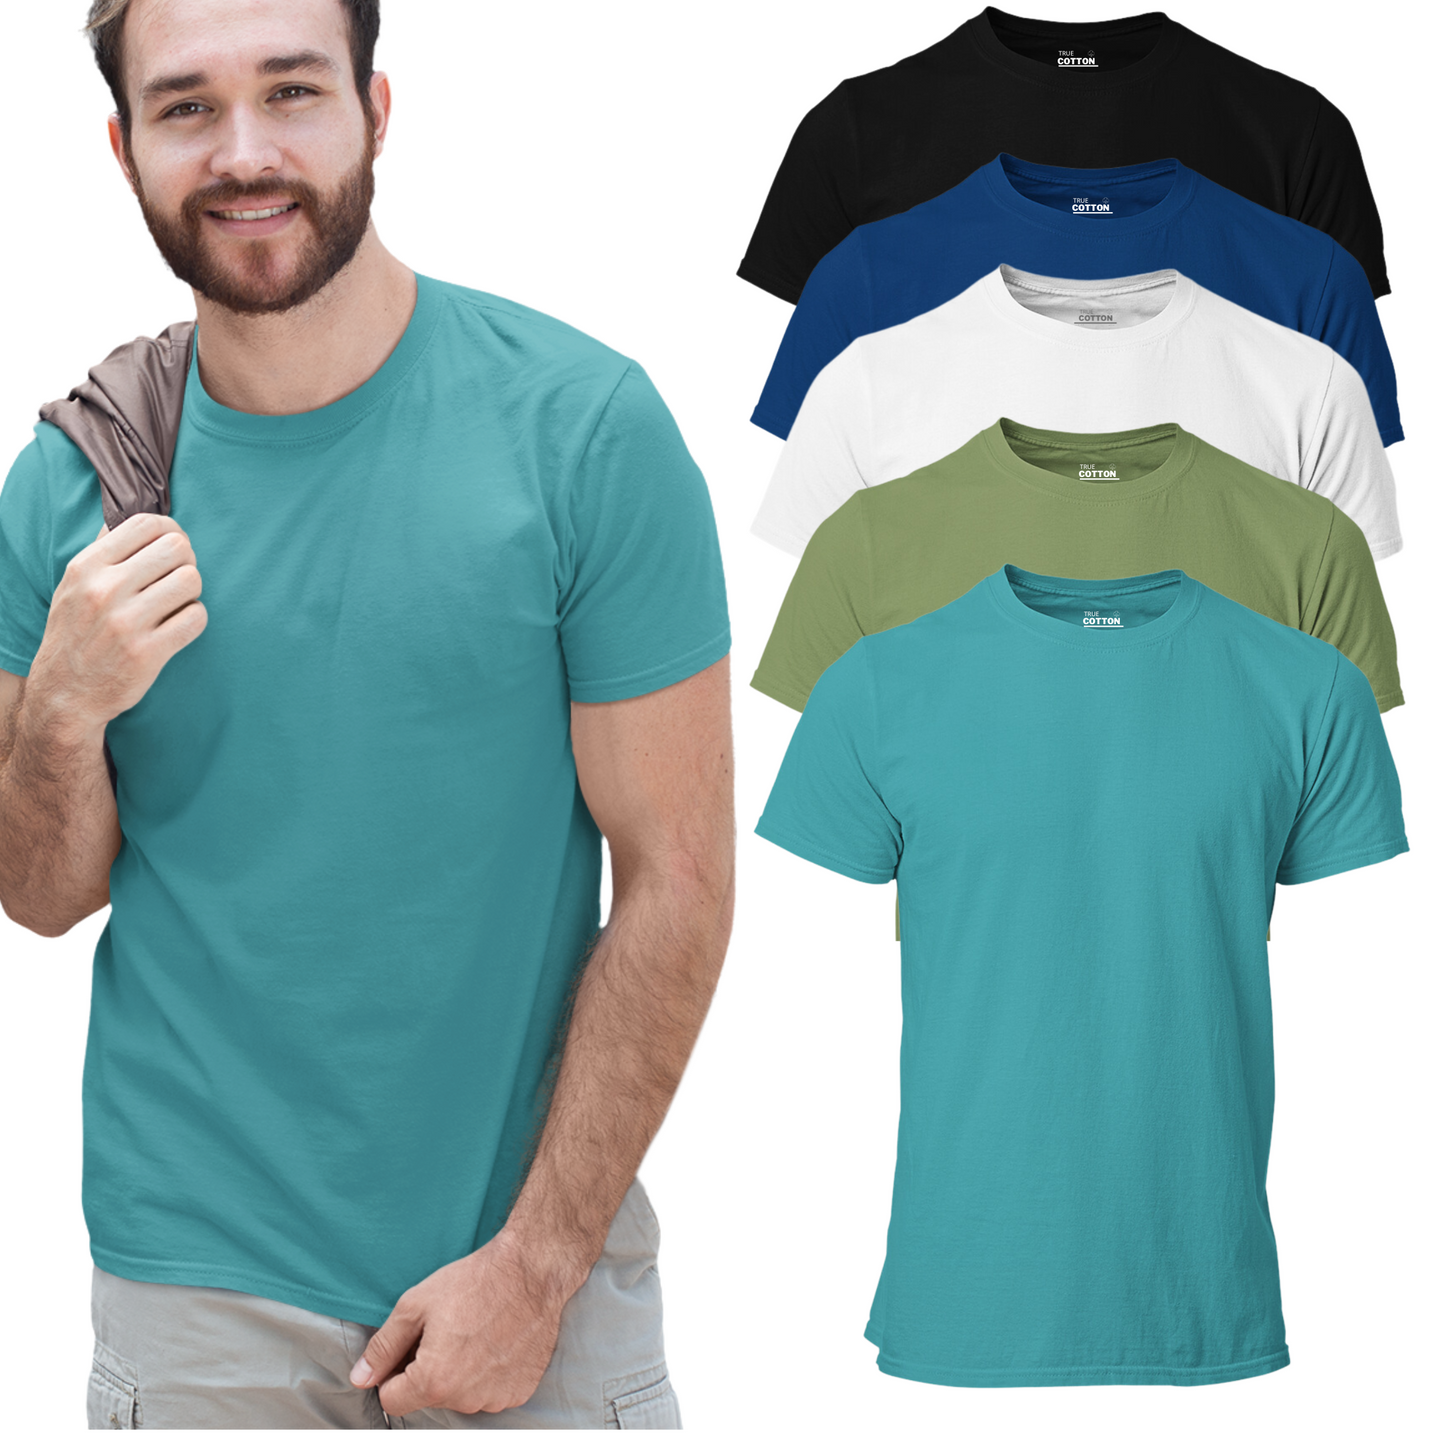 Men's 100% Cotton Premium Round Neck Tshirts - 5 Pack - Black/White/Navy/Military Green/Pine Green